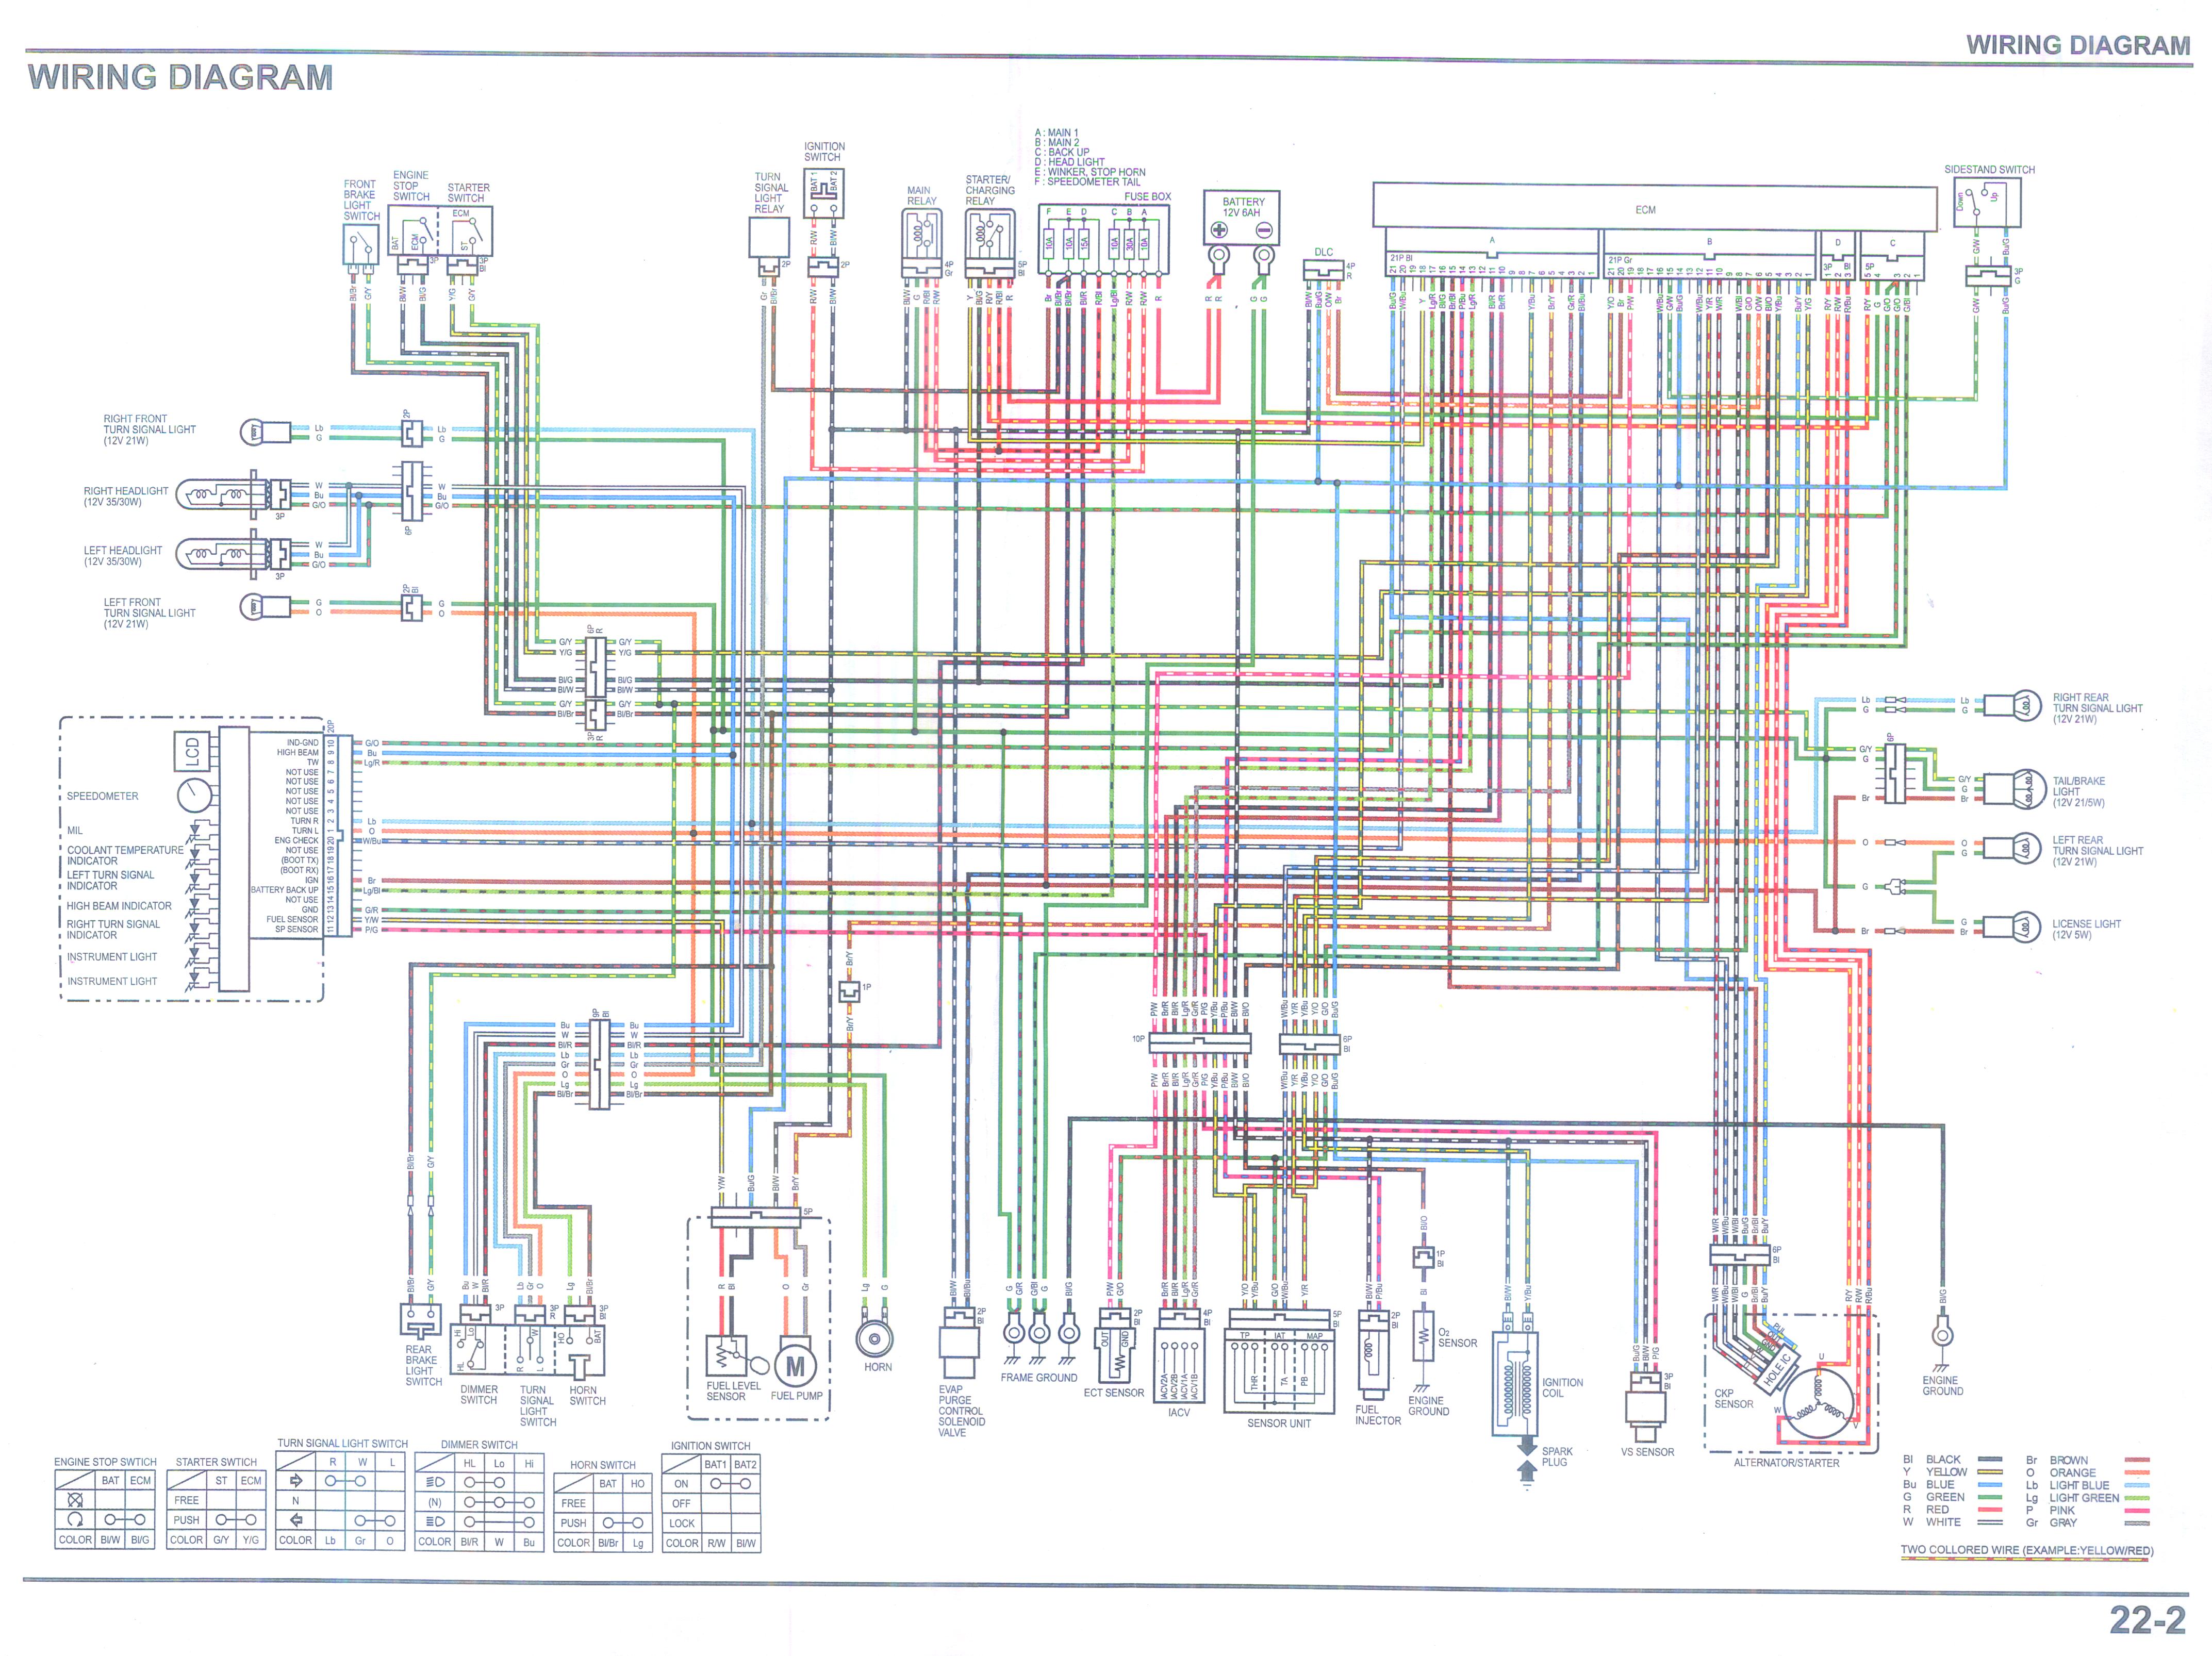 Honda PCX150 Wiring Diagram.jpg